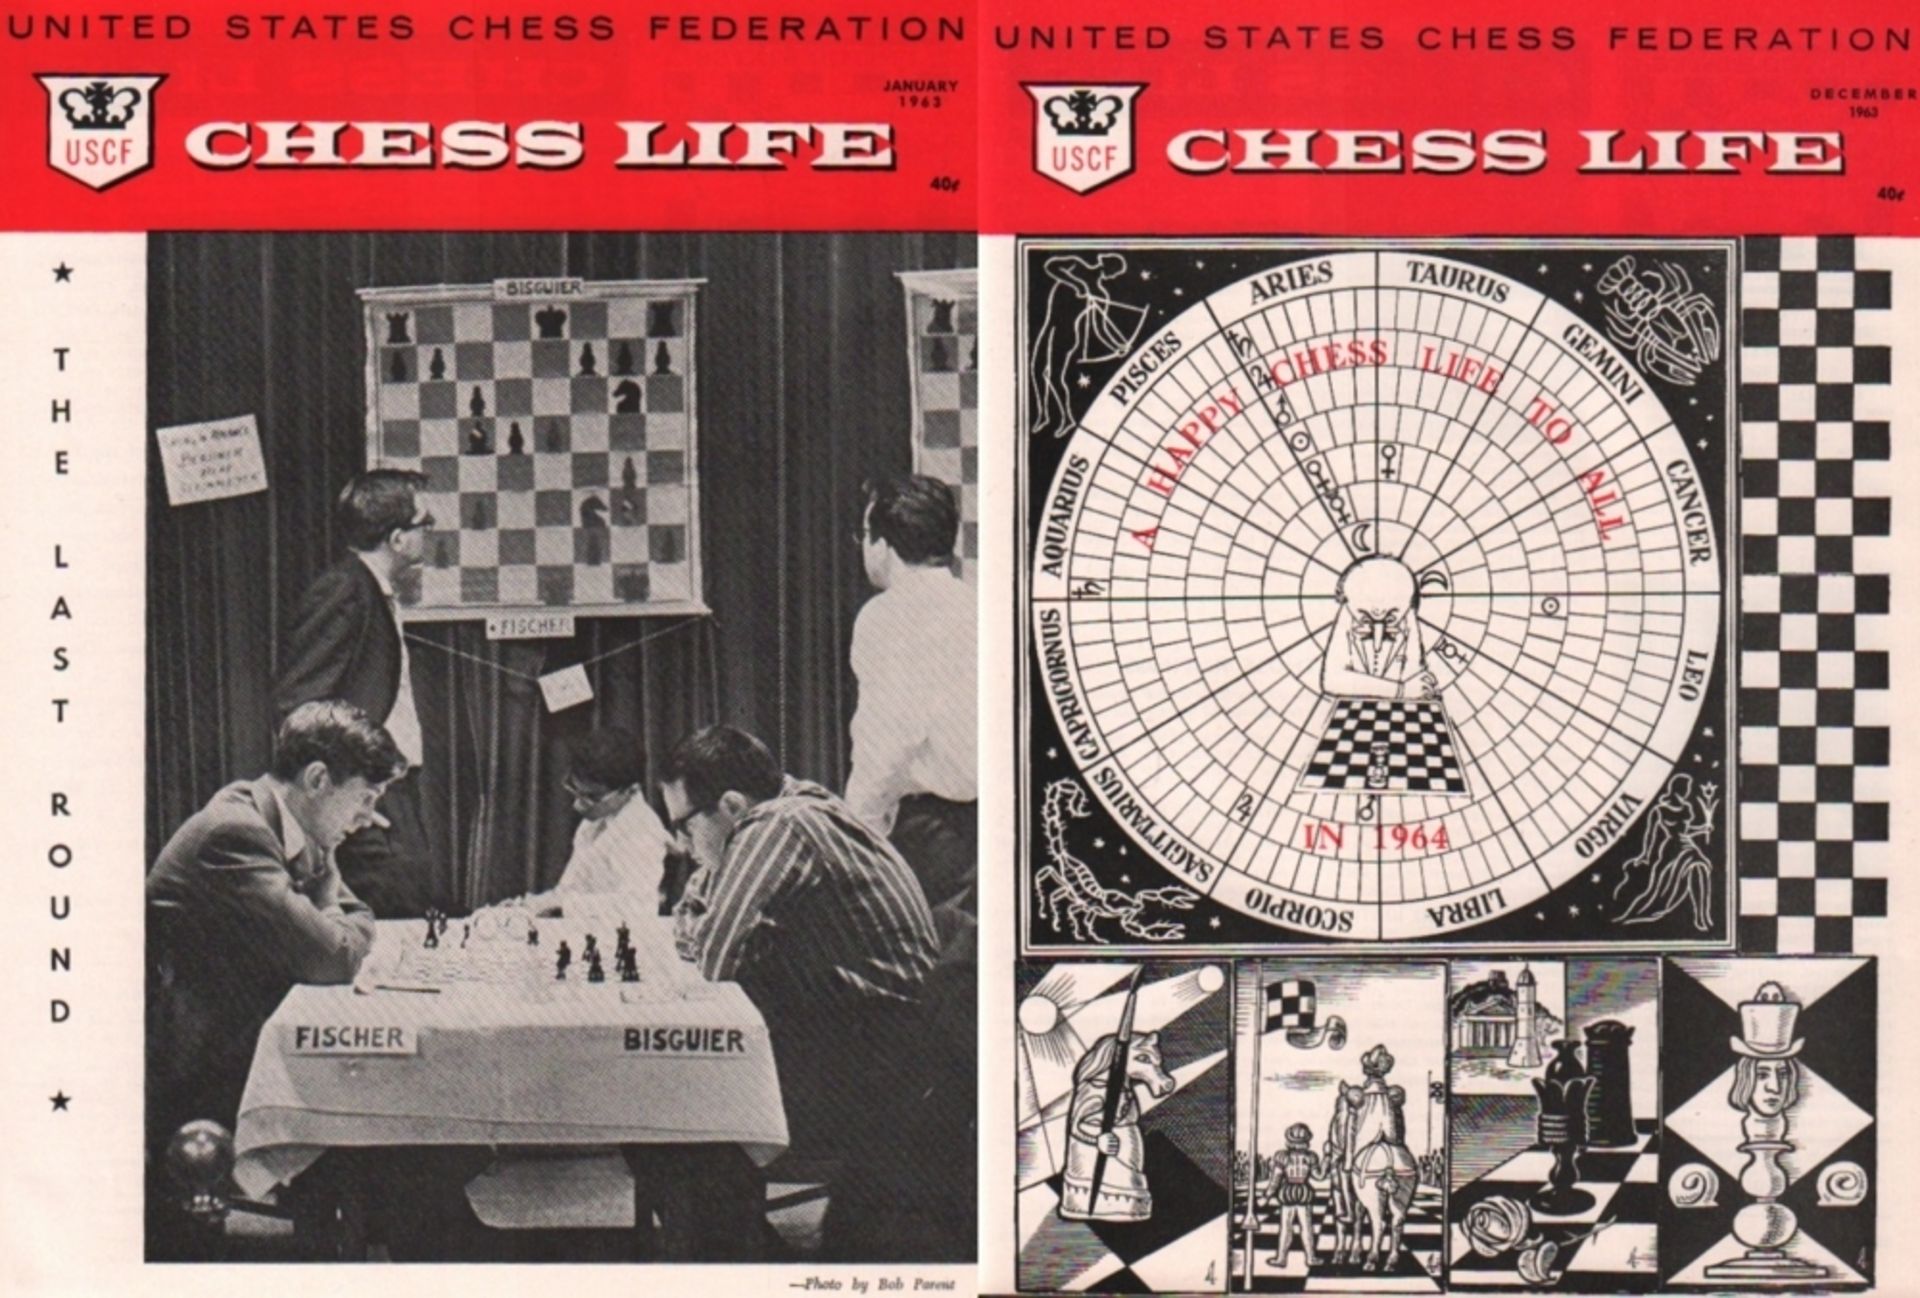 Chess Life. United States Chess Federation. Editor: J. F. Reinhardt. Volume XVIII, Nr. 1 (